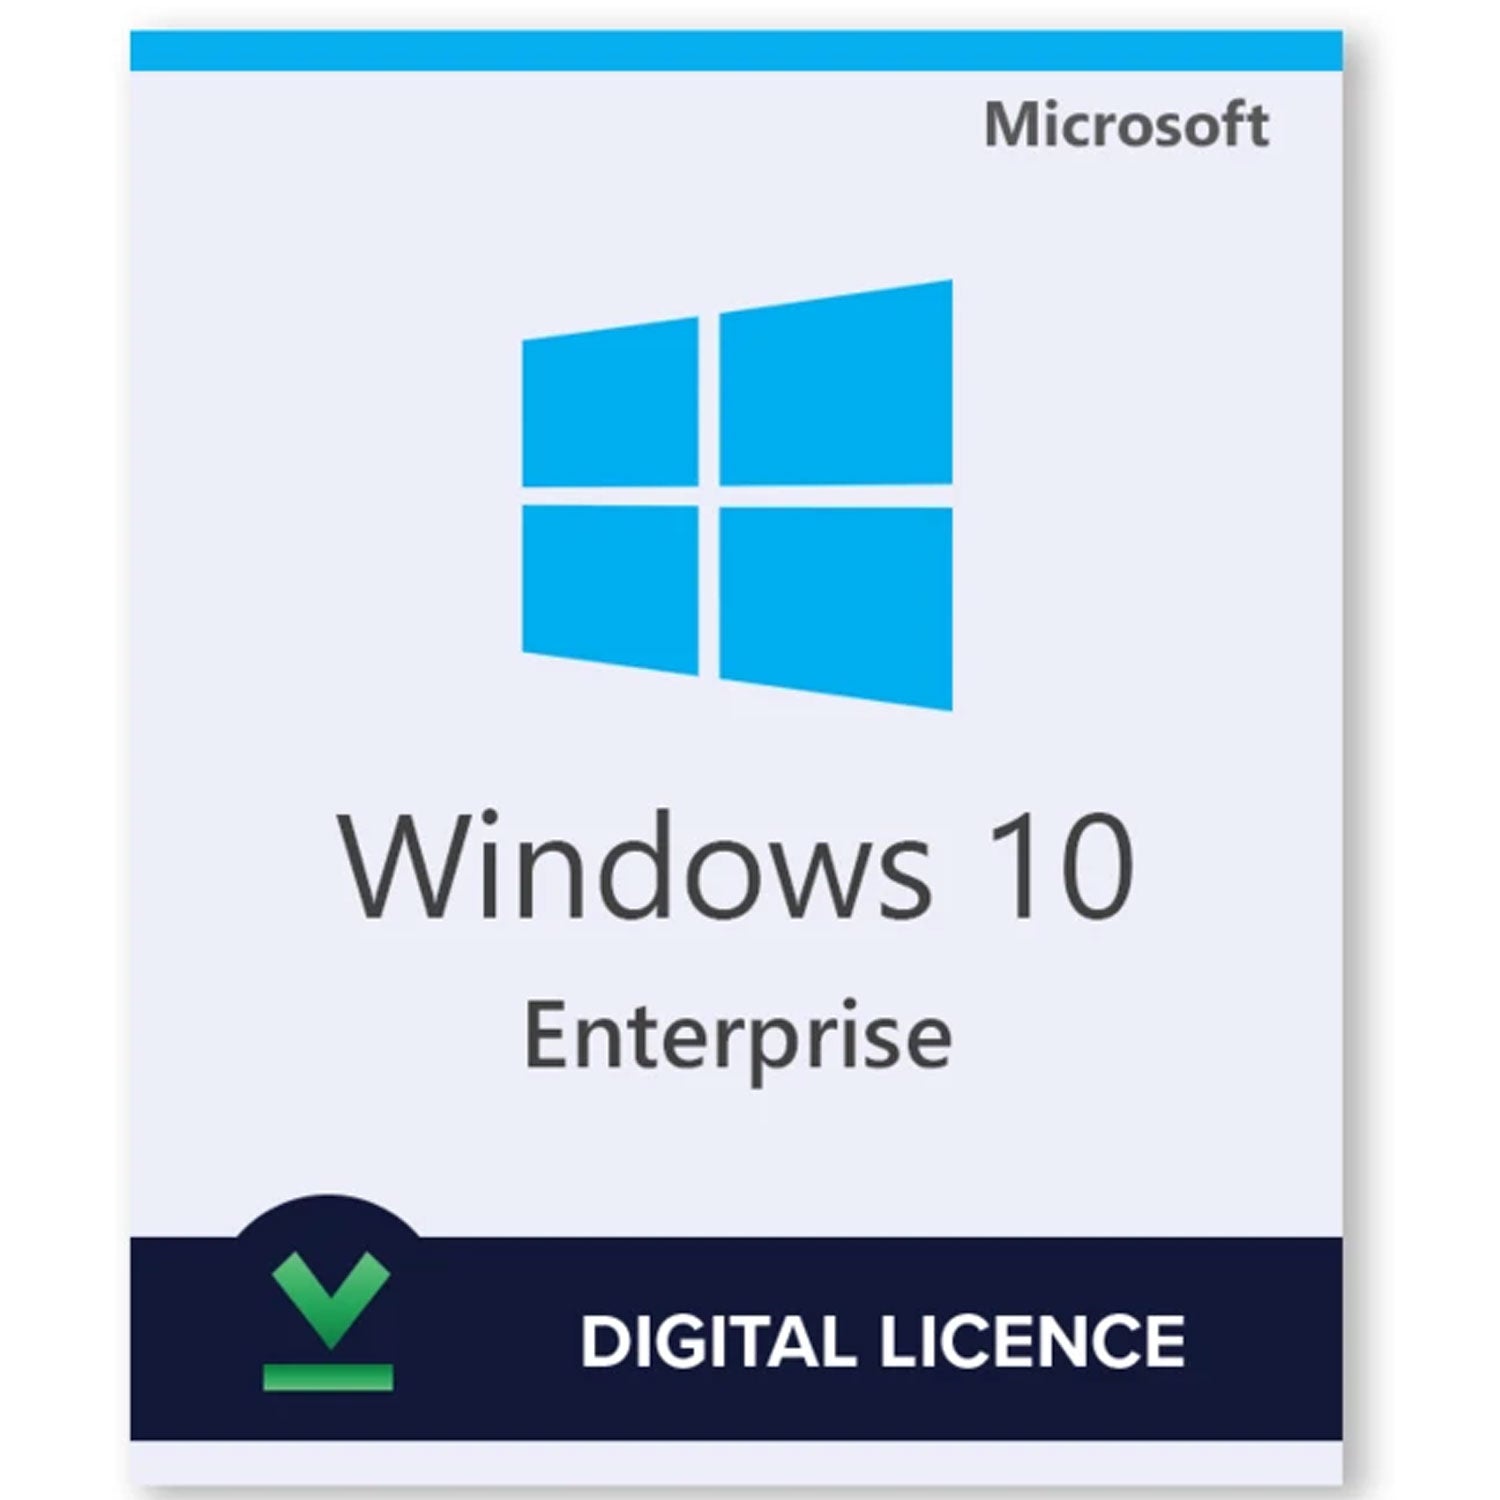 windows 10 digital license ultimate 1.1